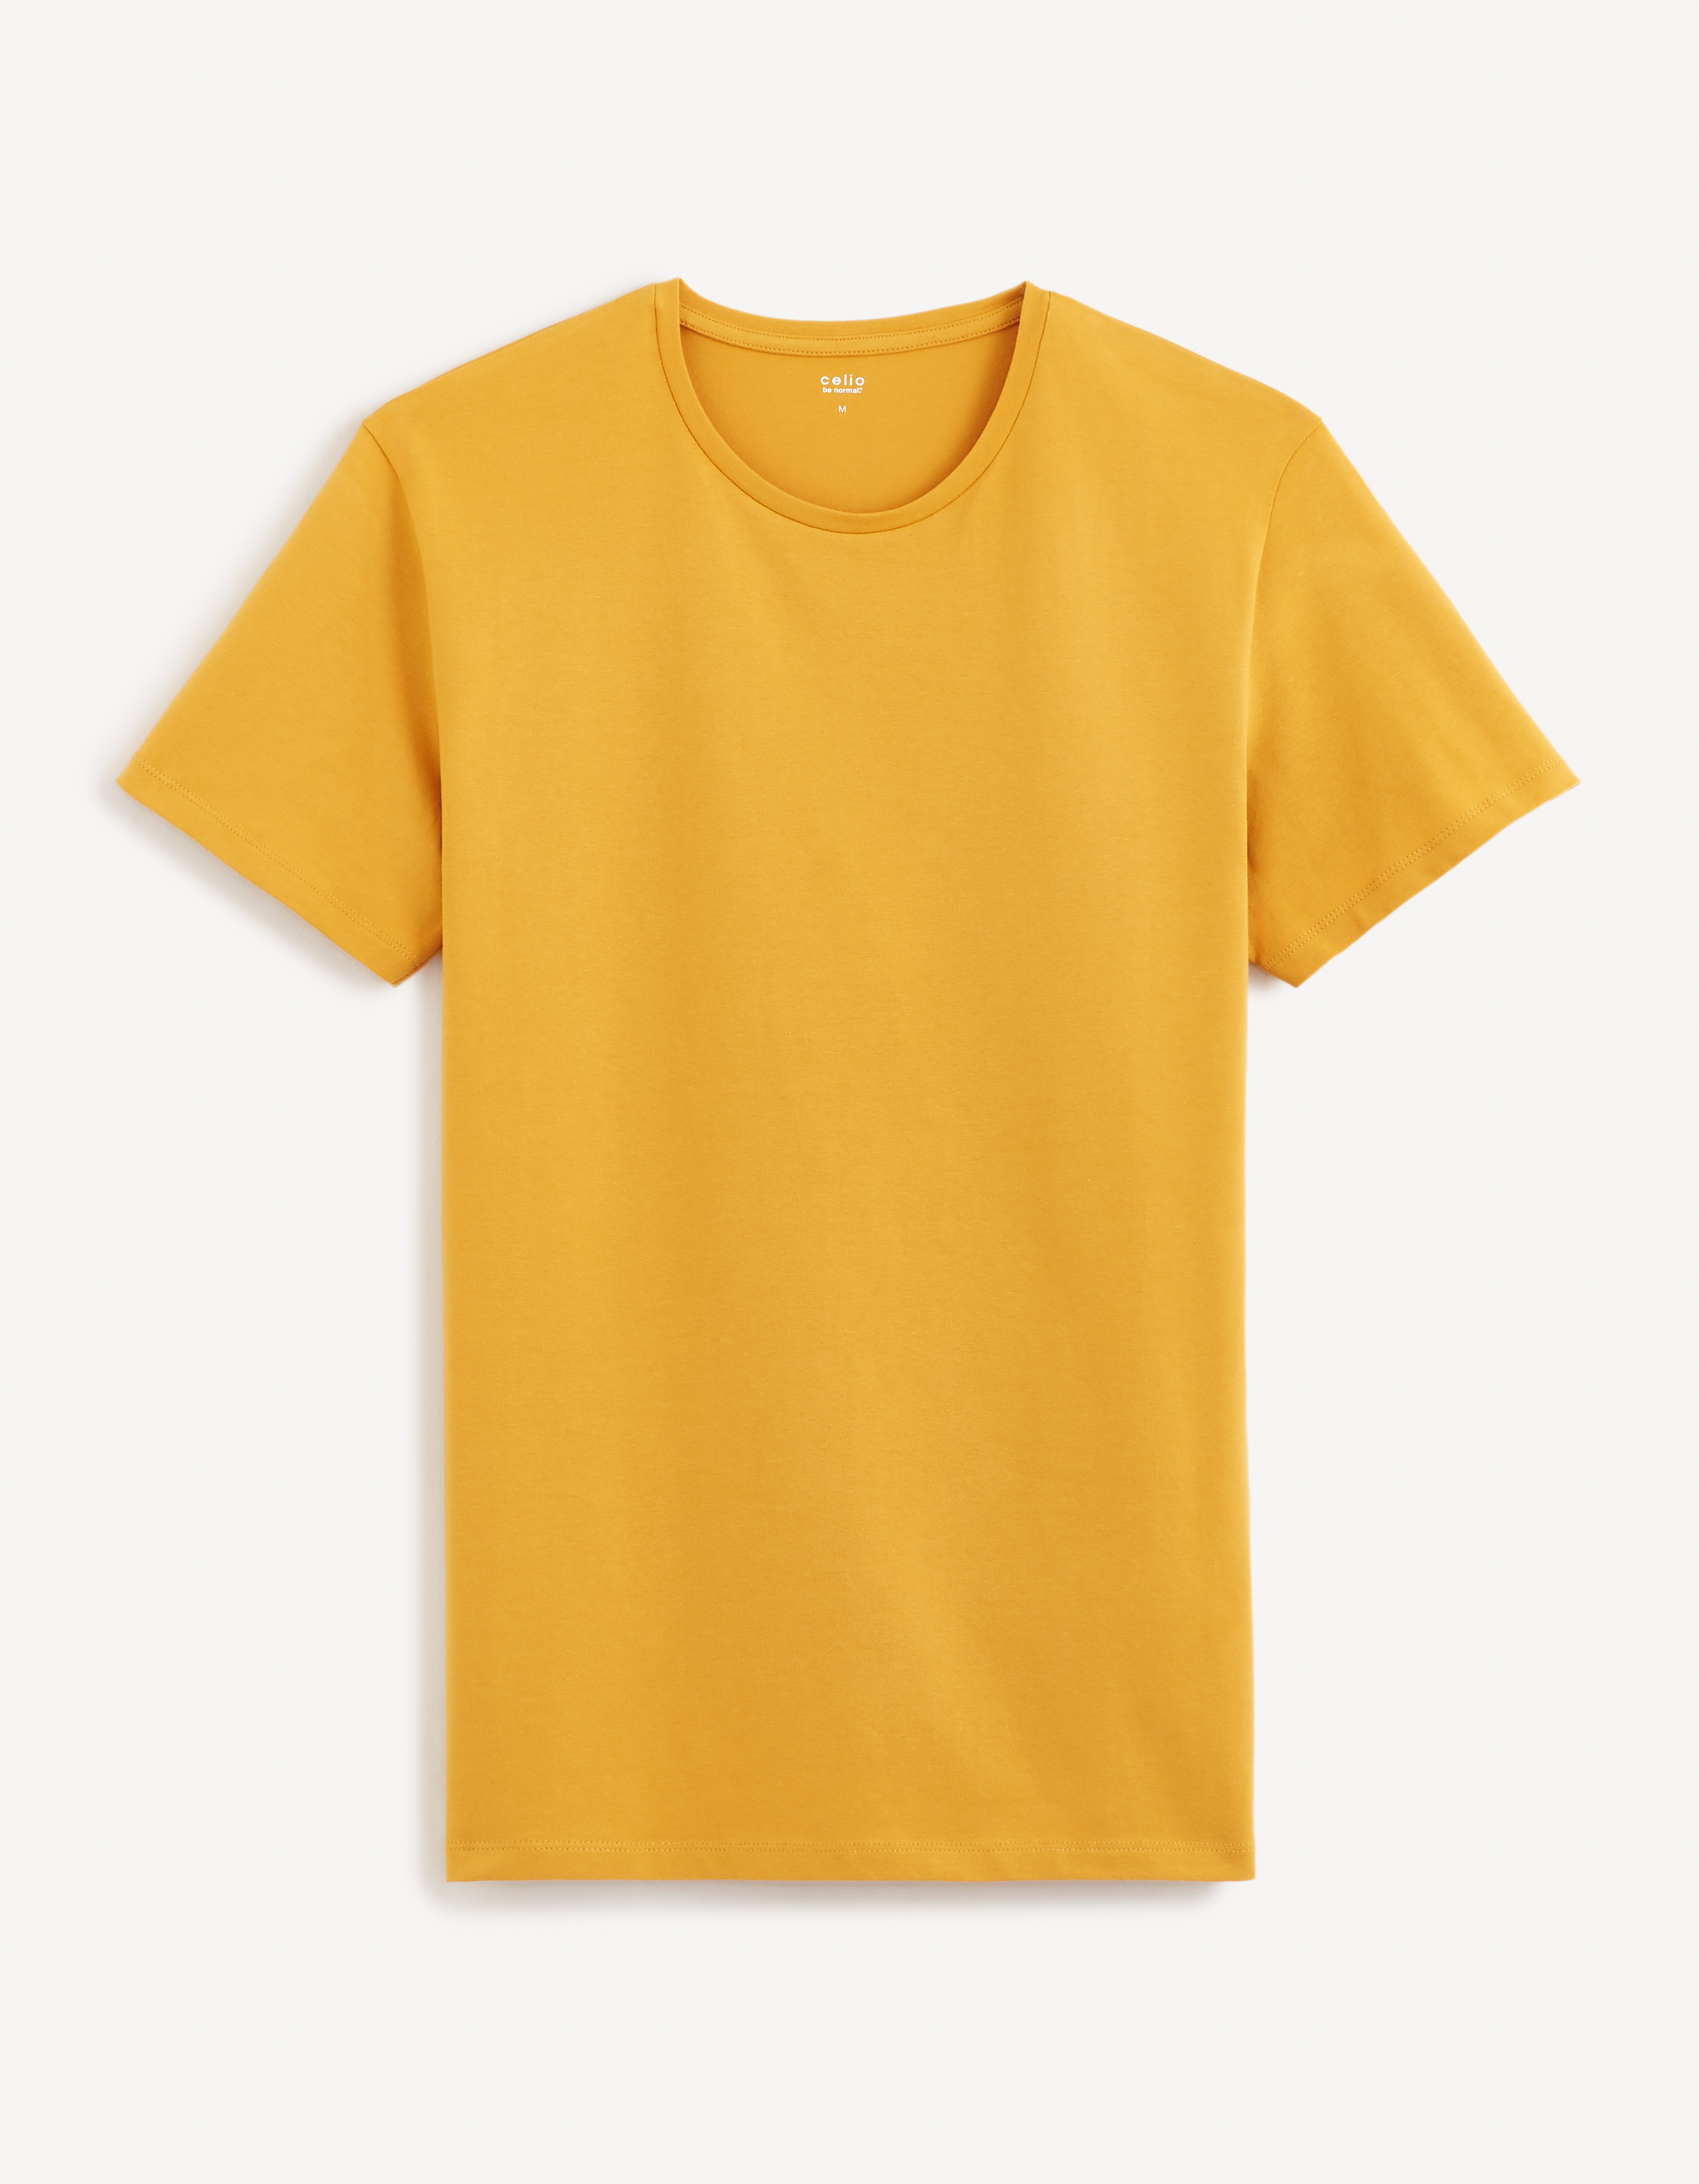 Celio Short Sleeve T-Shirt Neunir - Men